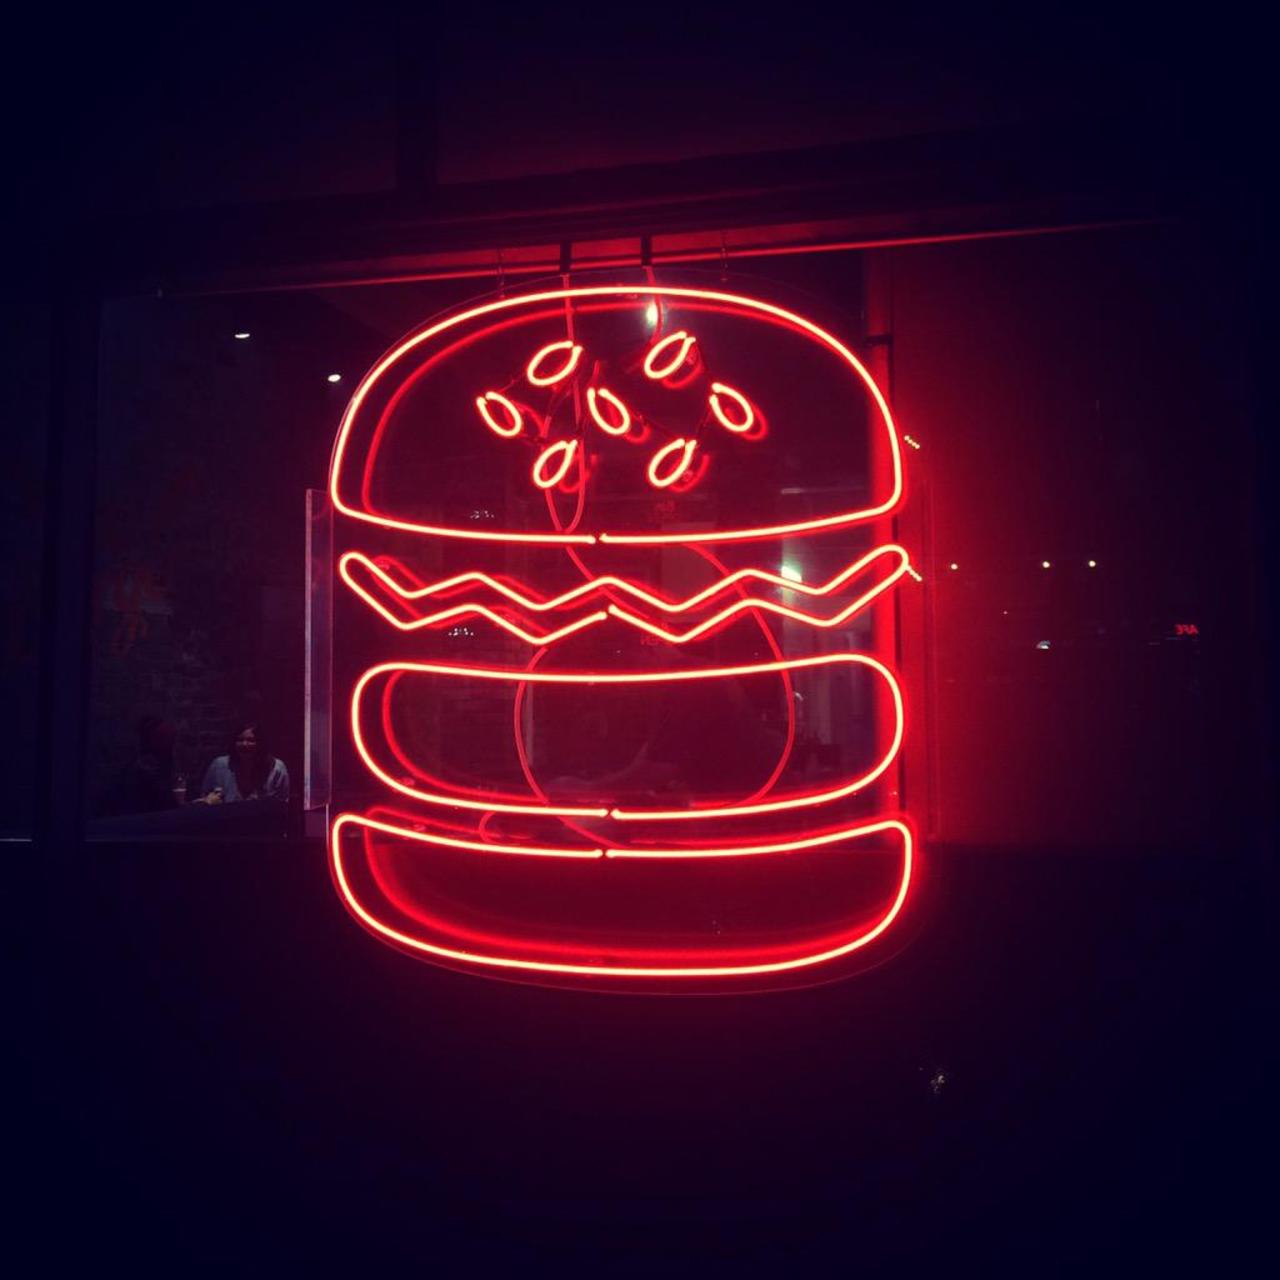 Mr Burger, Brunswick Street #fitzroy #melbourne #neon #neonsign #delicious #lightart  http://t.co/8gNoMfJBy8